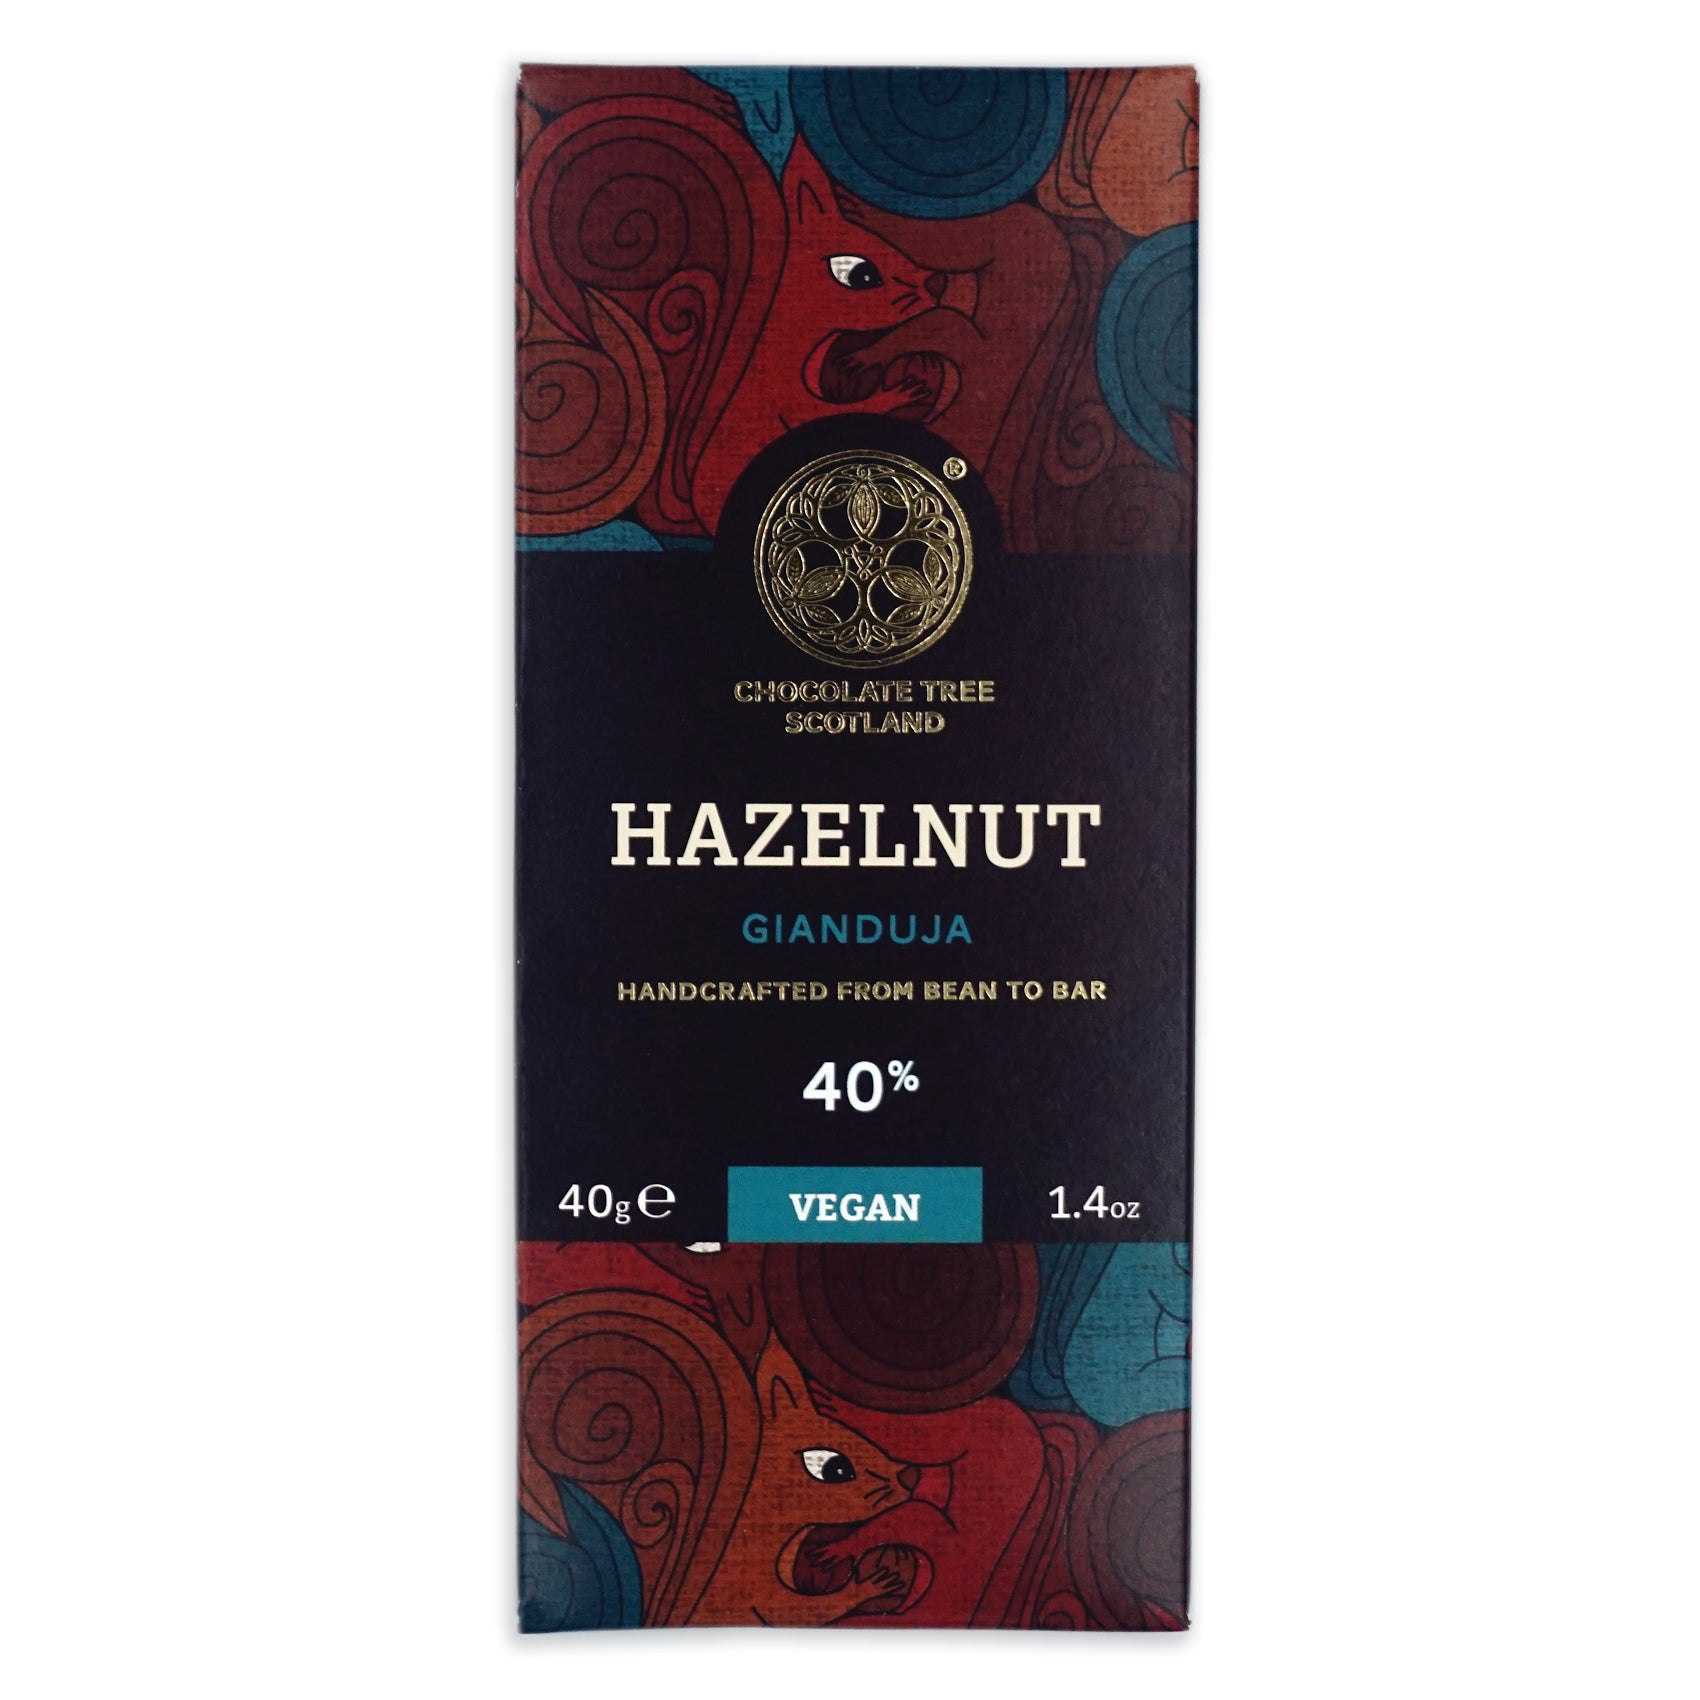 A bar of Chocolate Tree Hazelnut chocolate